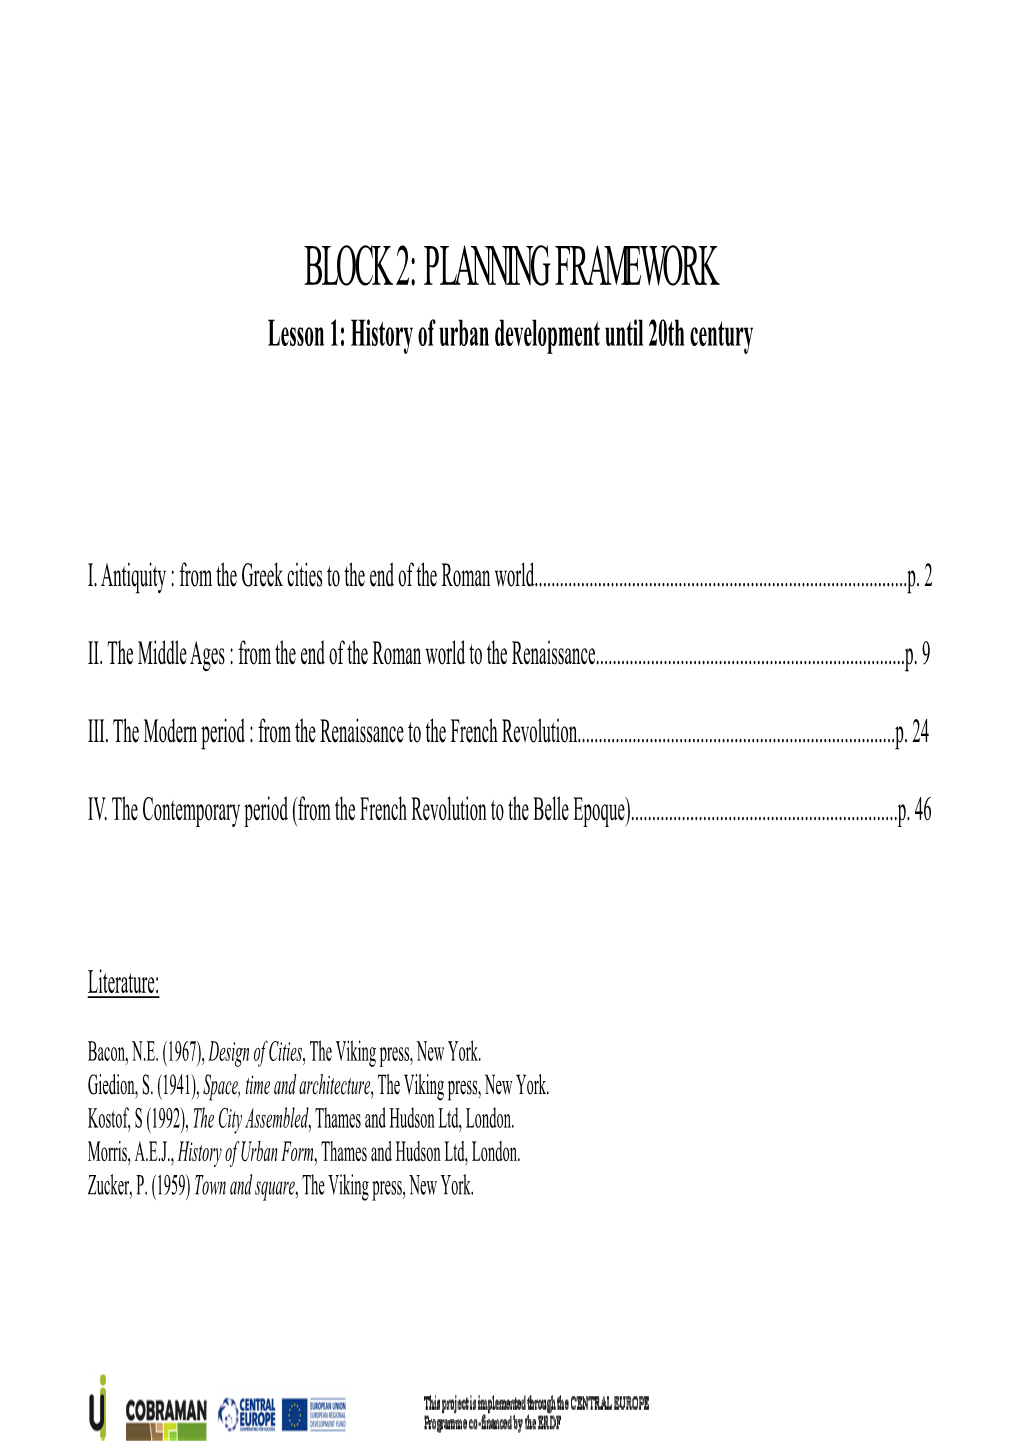 Block 2: Planning Framework